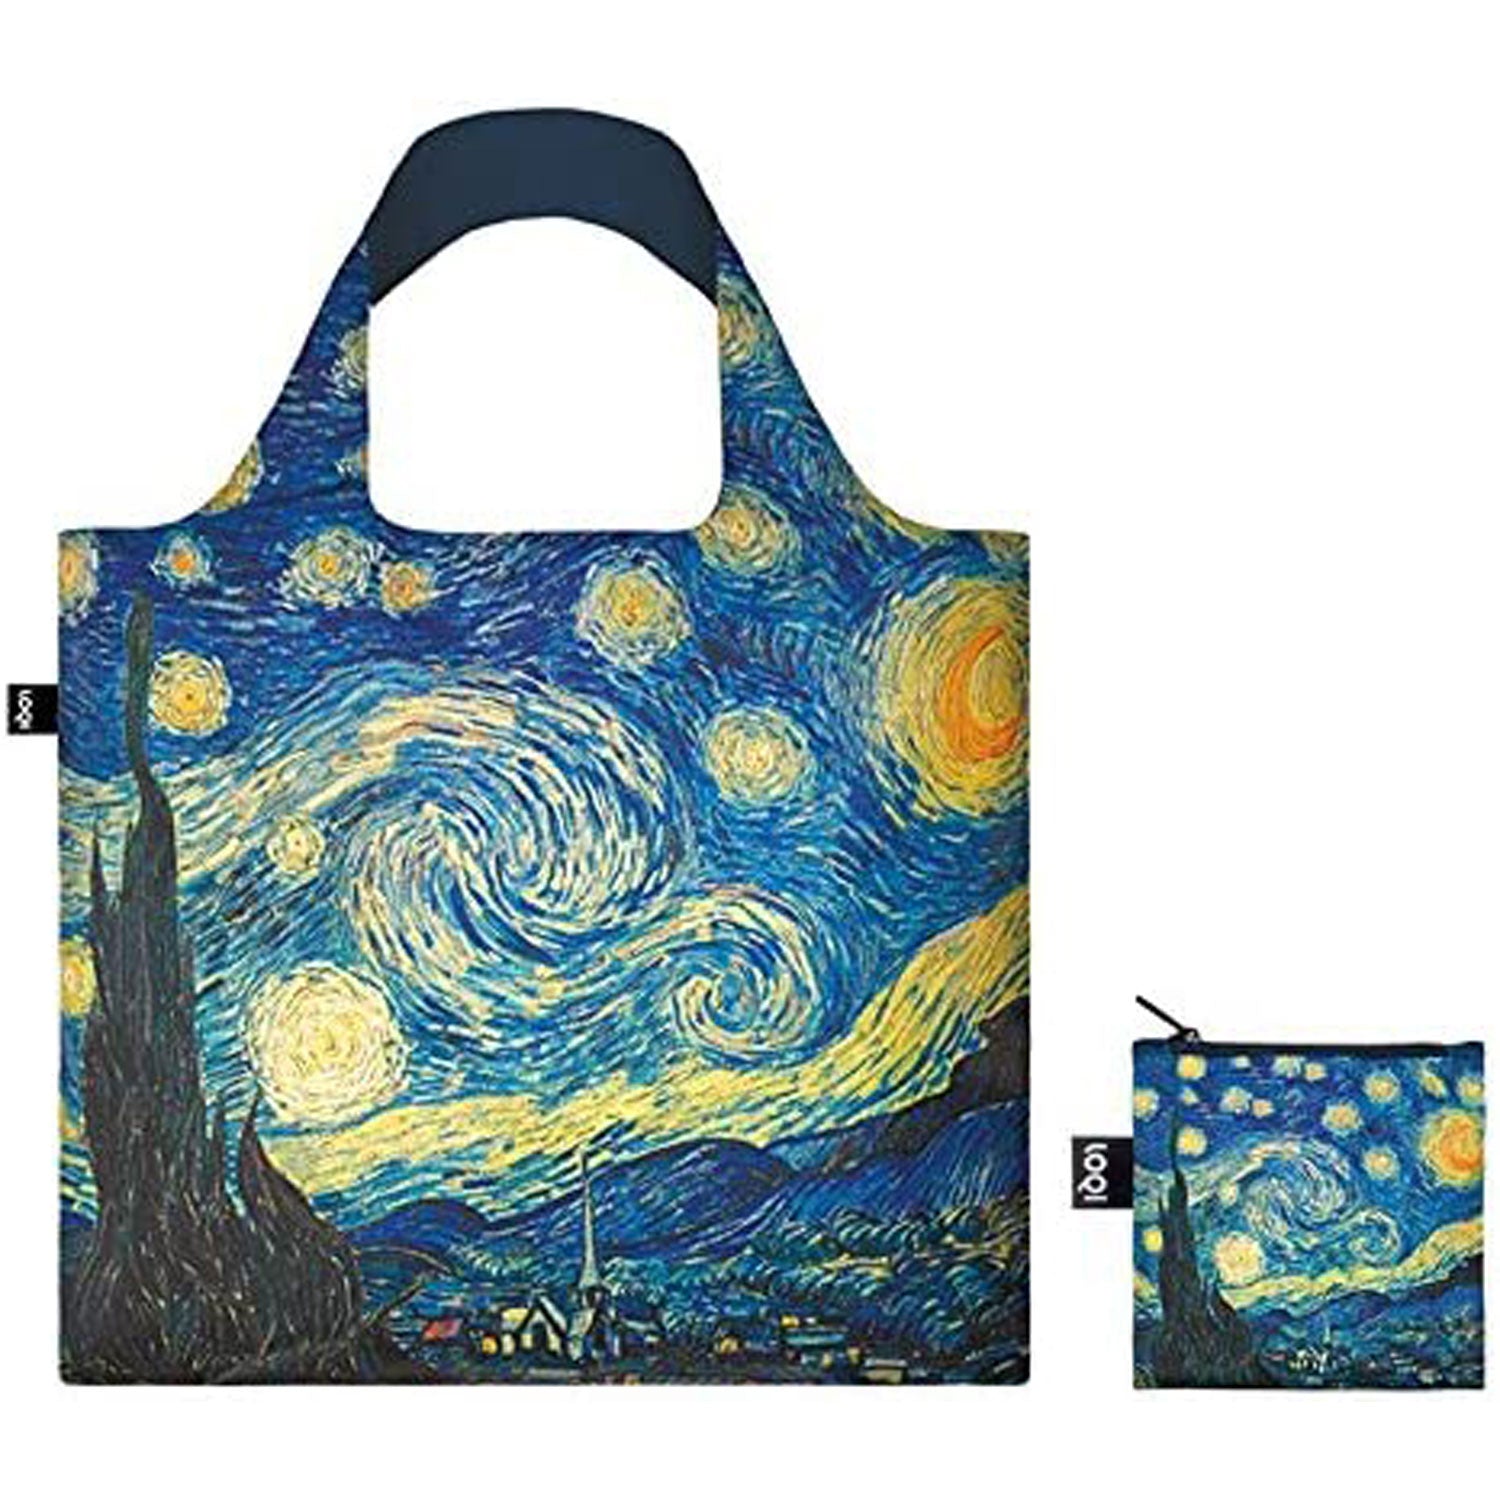 LOQI bag "The Starry Night"